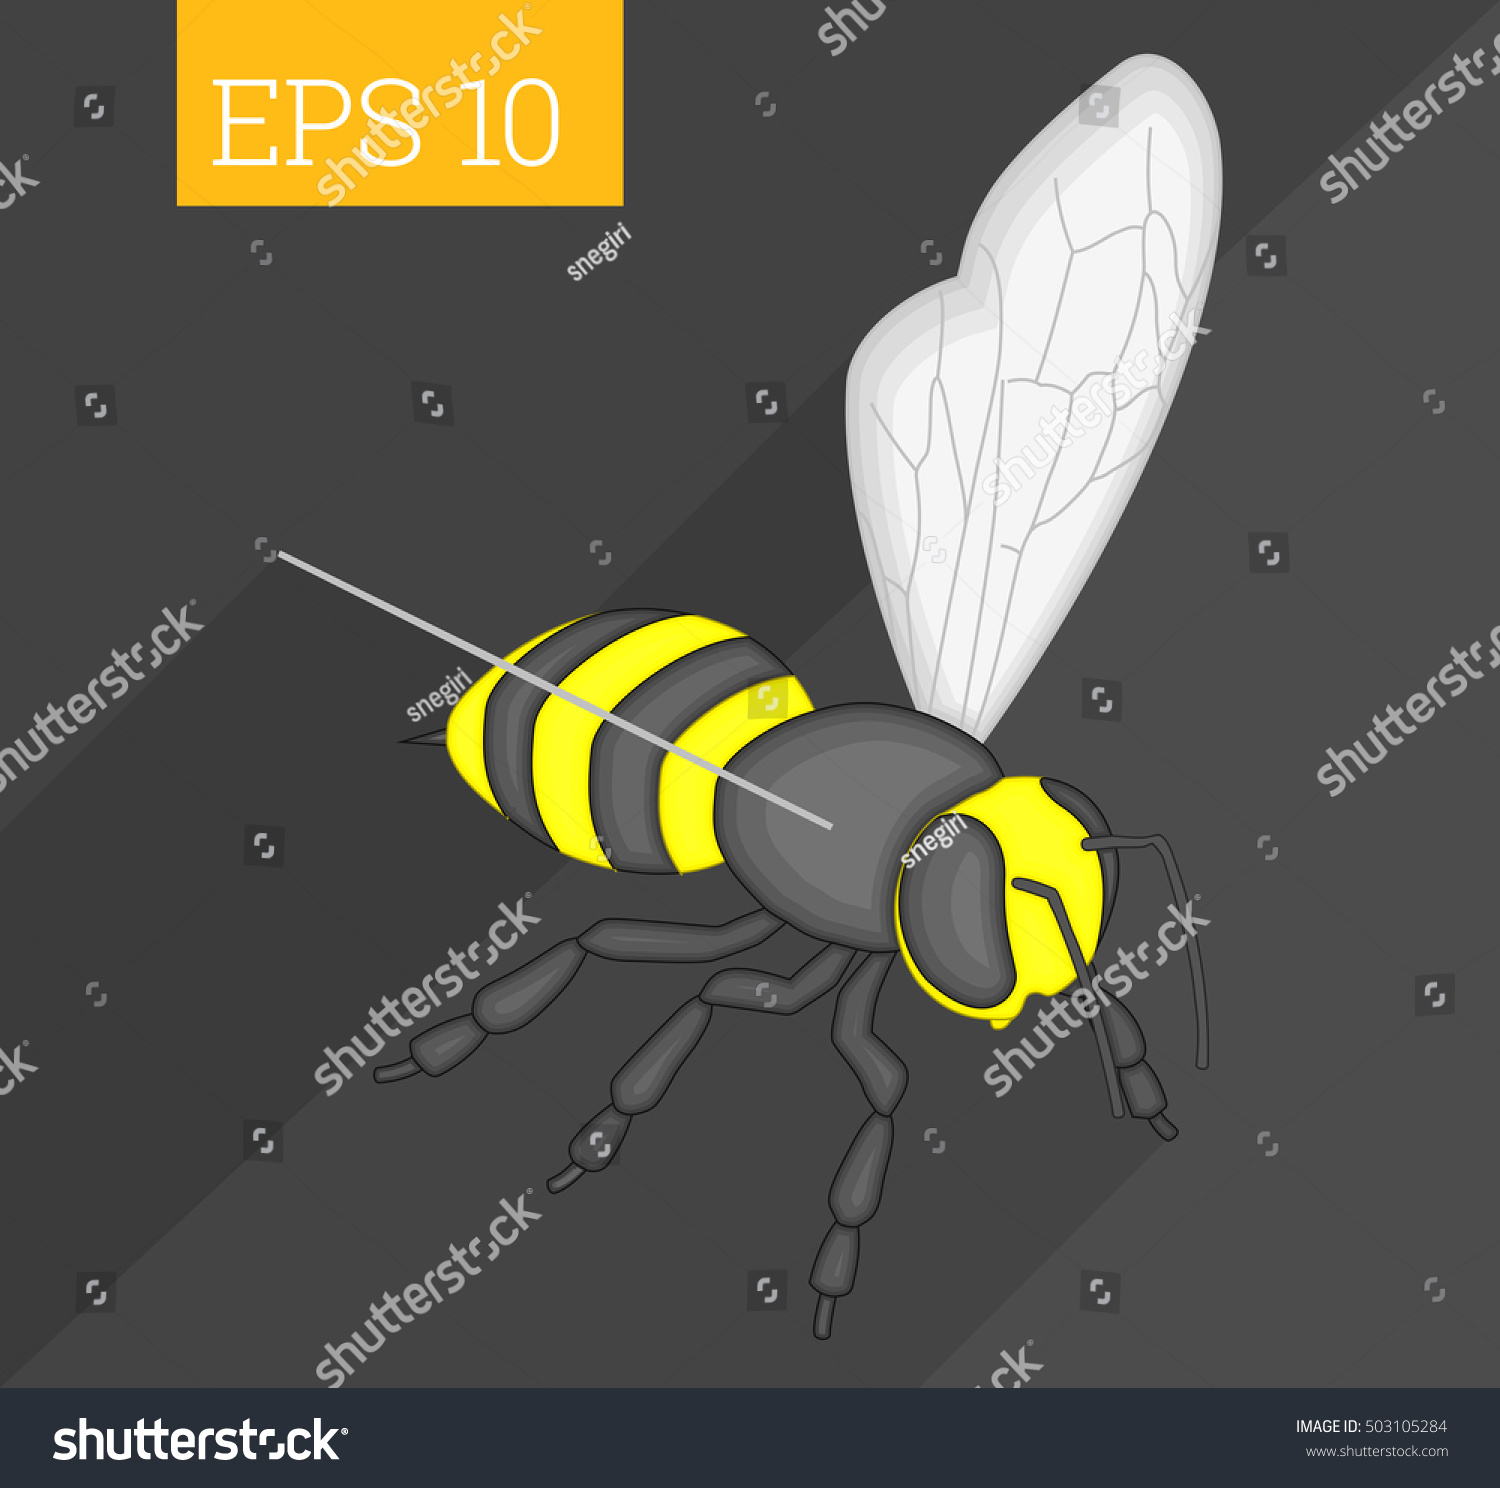 Bee Eps10 Vector 3d Illustration Honeybee Stock Vector Royalty Free 503105284 Shutterstock